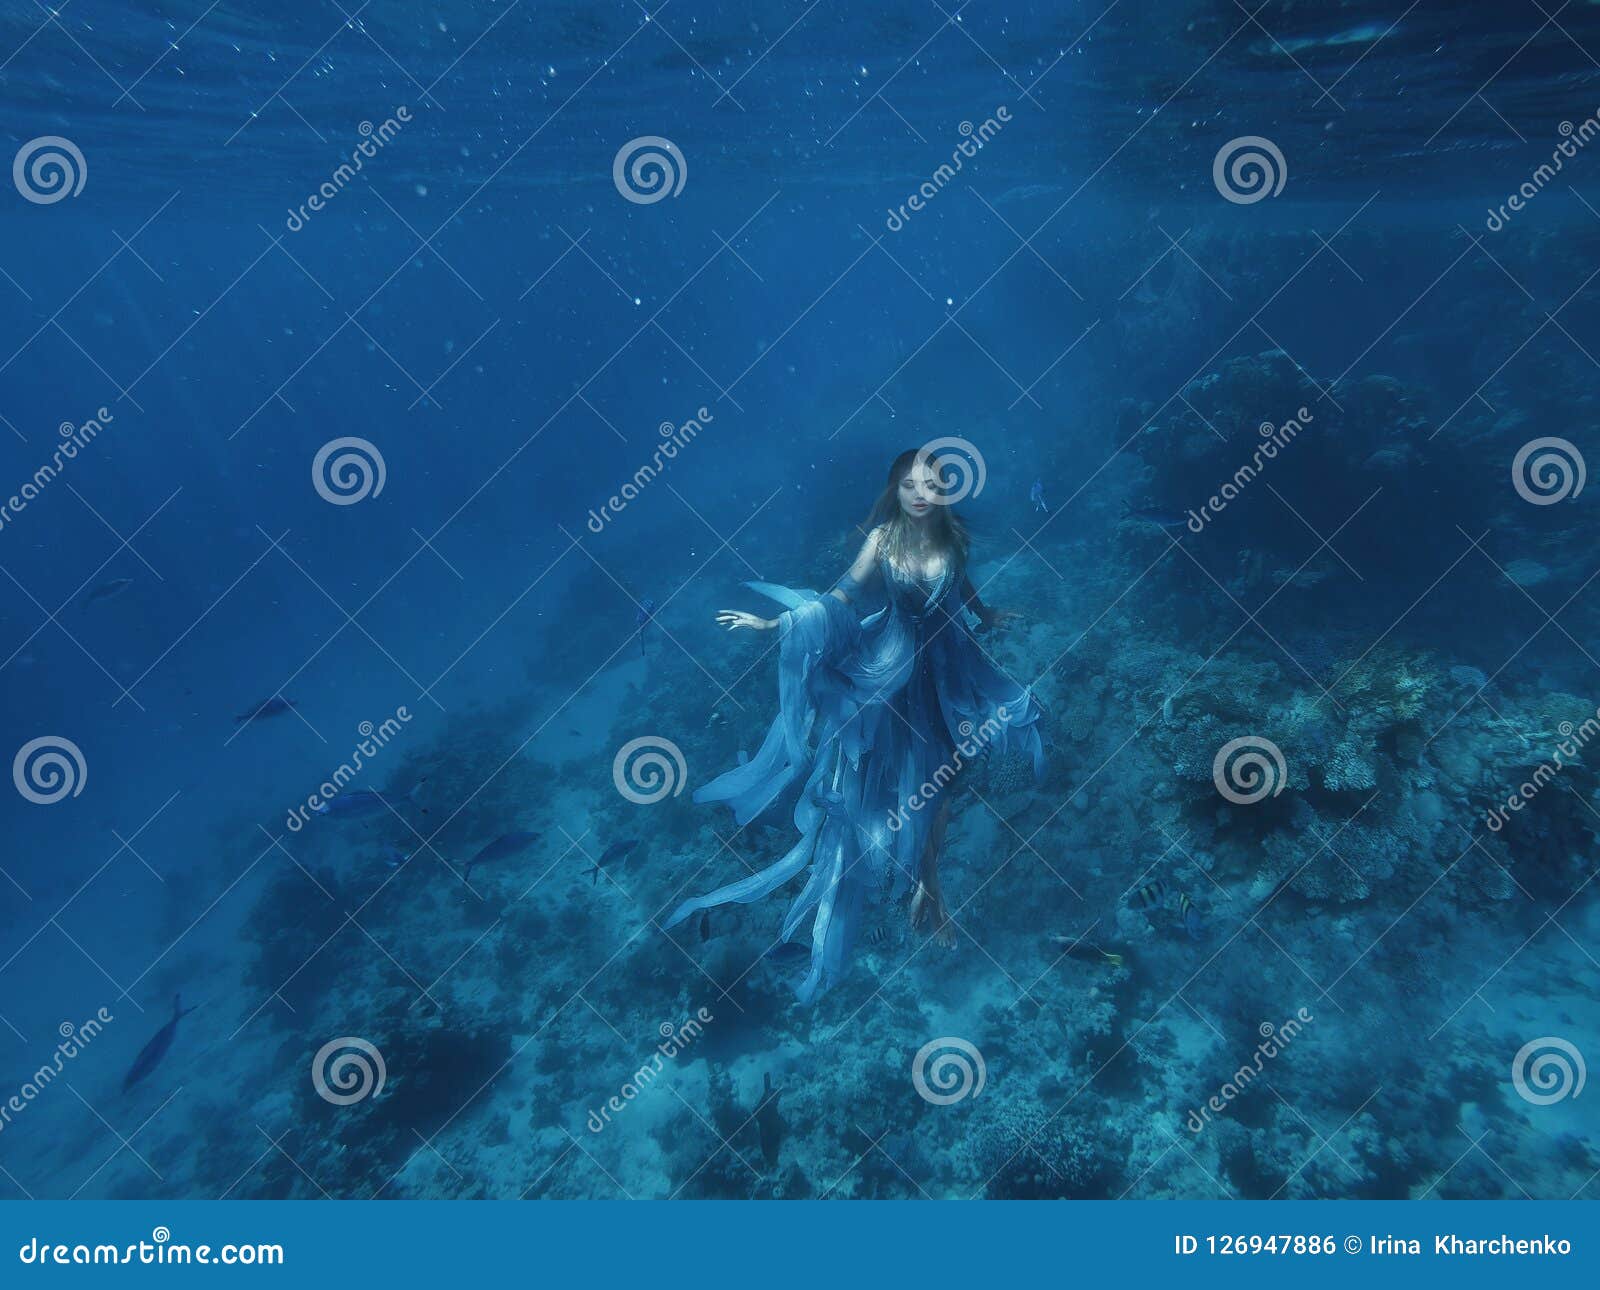 A Magical Fairy Mermaid In A Blue Flying Light Dress Floats On The Ocean Floor Sea Queen And Jellyfish A Halloween Stock Photo Image Of Background Flower 126947886 - โรงแรมนางฟ าก บนางเง อก ว าวววว roblox hotel fairies mermaids